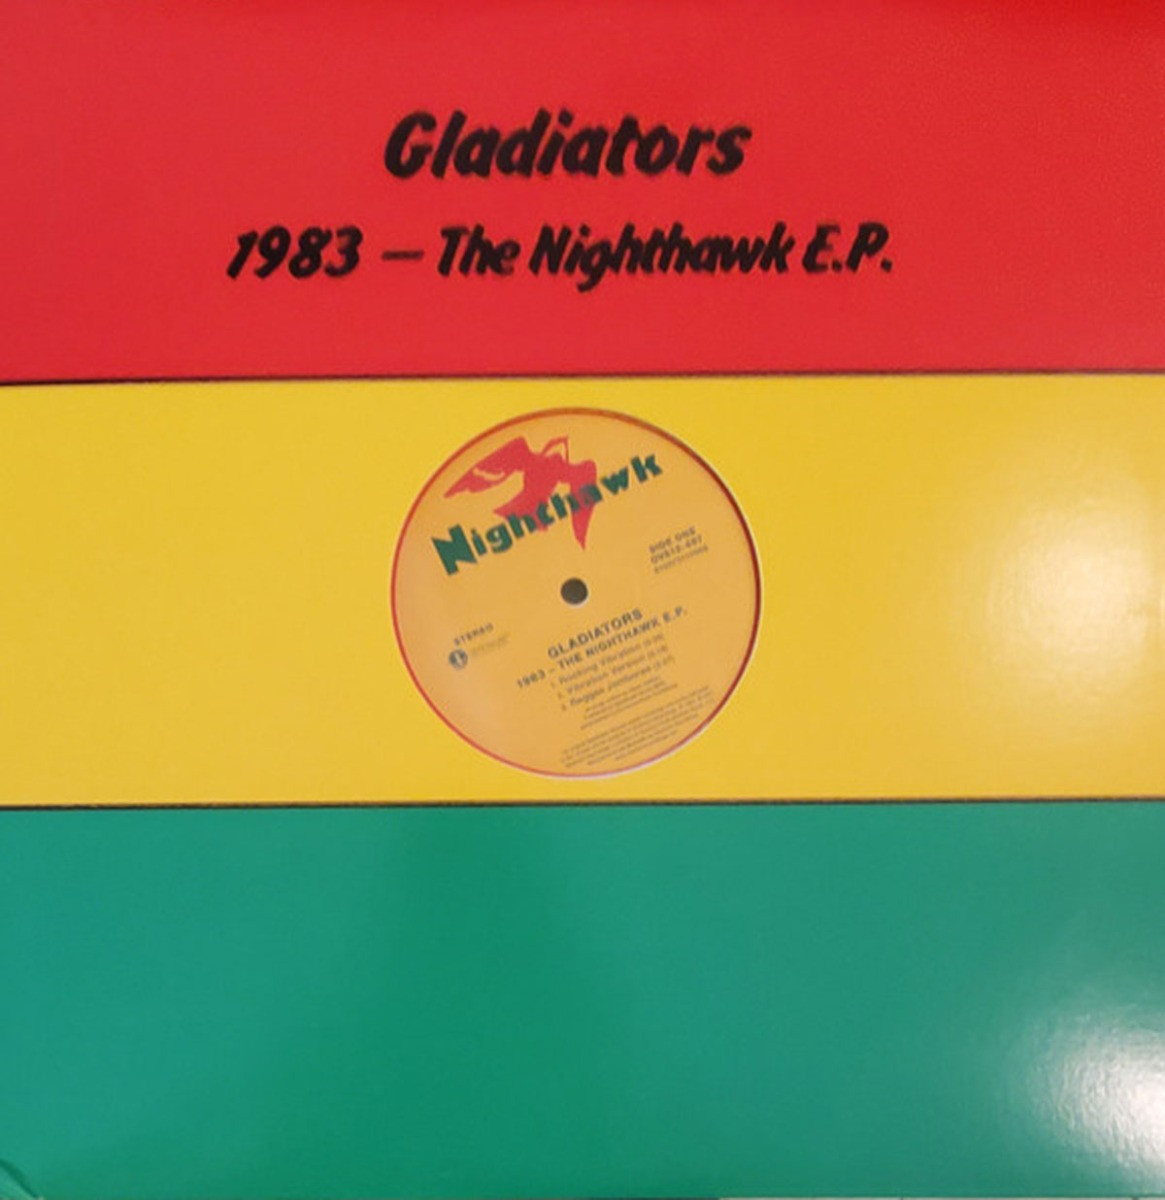 The Gladiators - 1983 - The Nighthawk E.P. LP